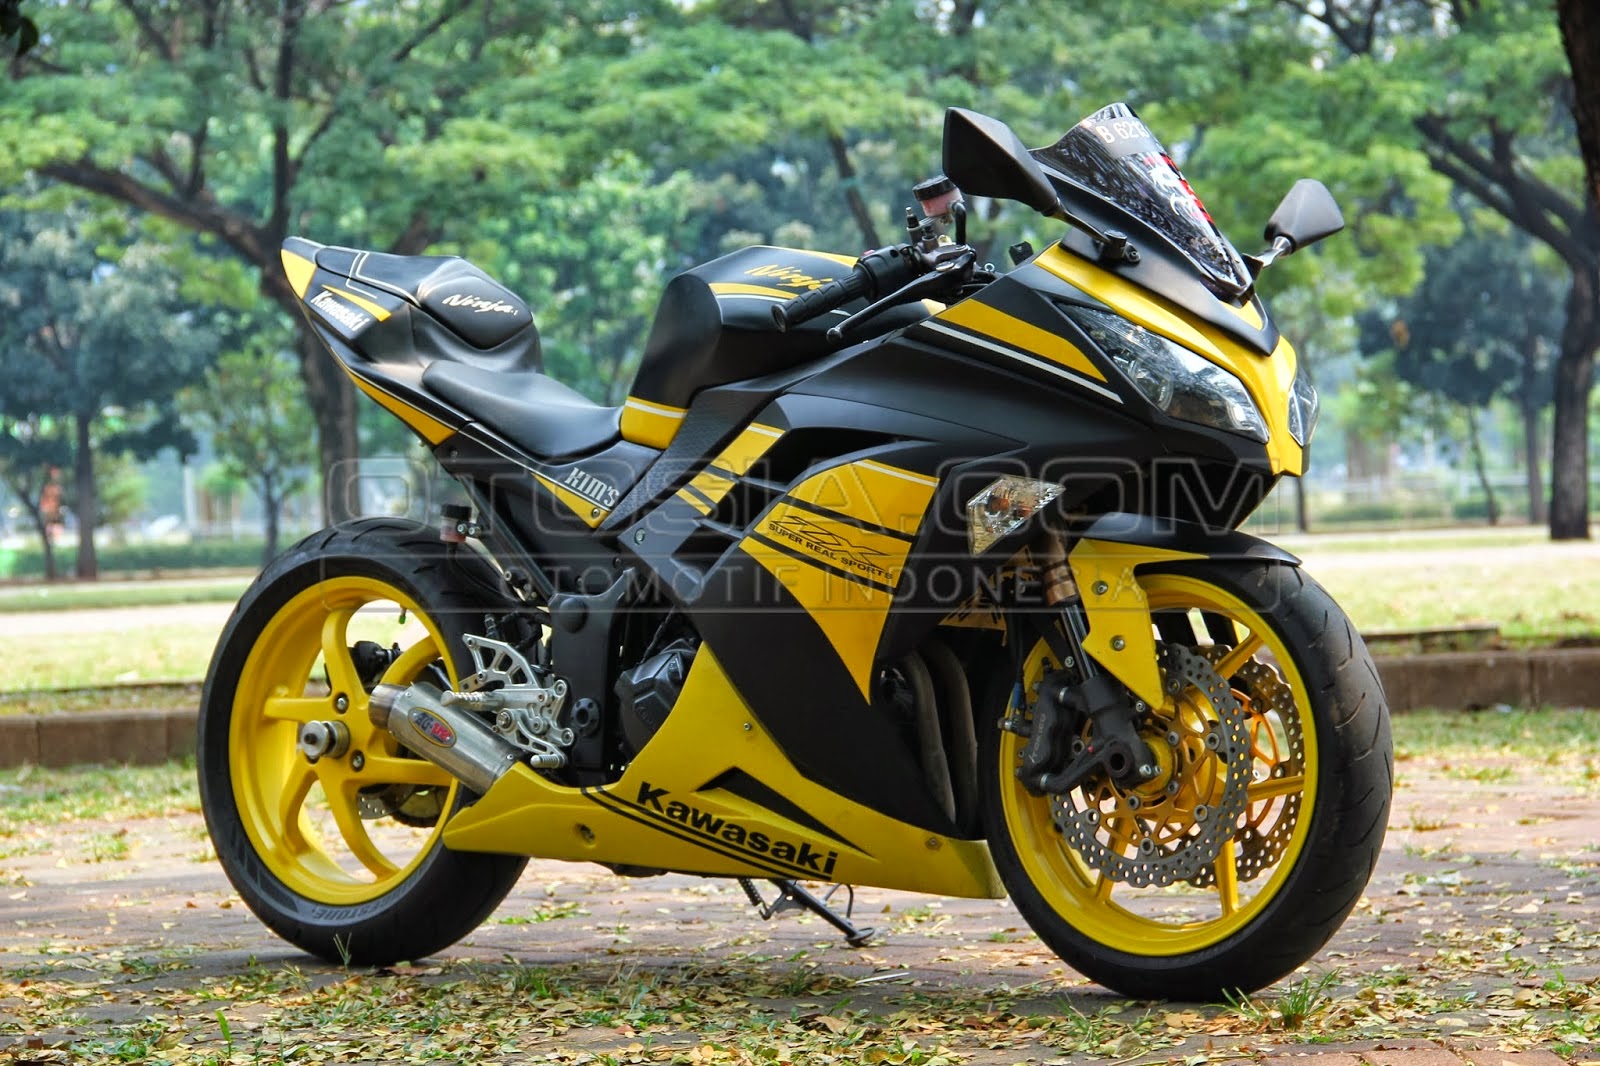  Kawasaki  Ninja Z250  Modifikasi Thecitycyclist